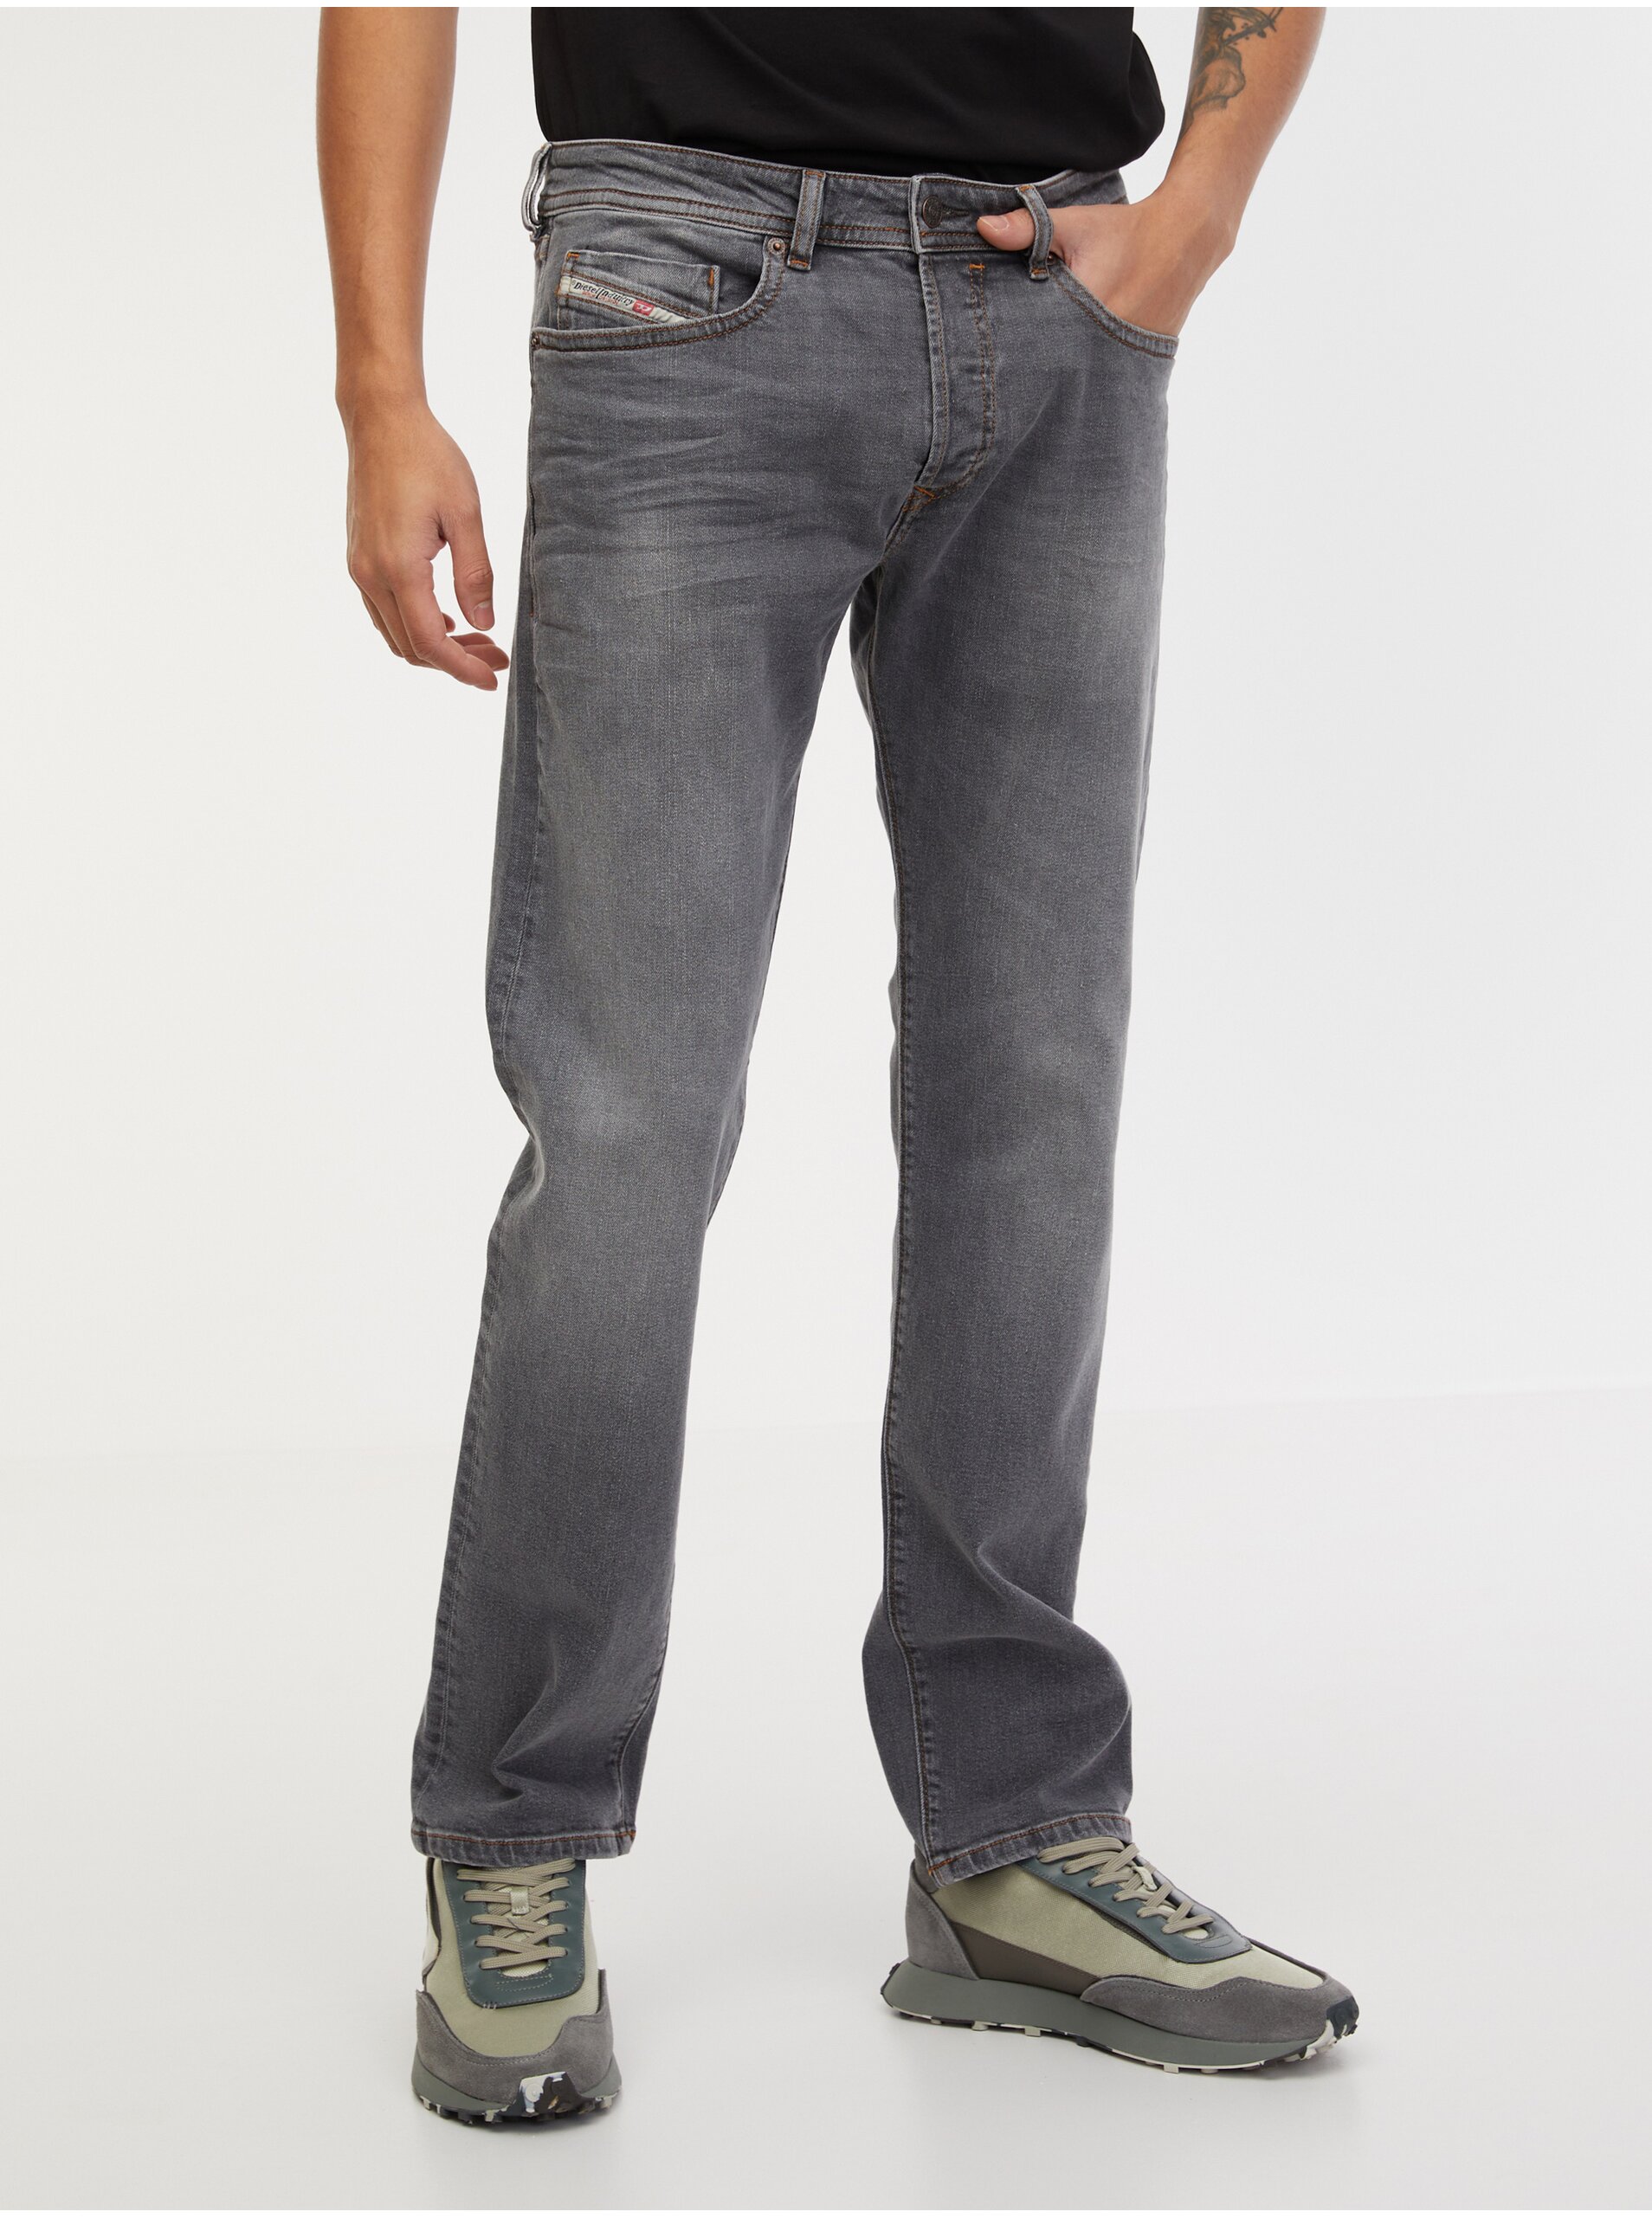 Grey Men's Straight Fit Diesel Buster Jeans - Men's